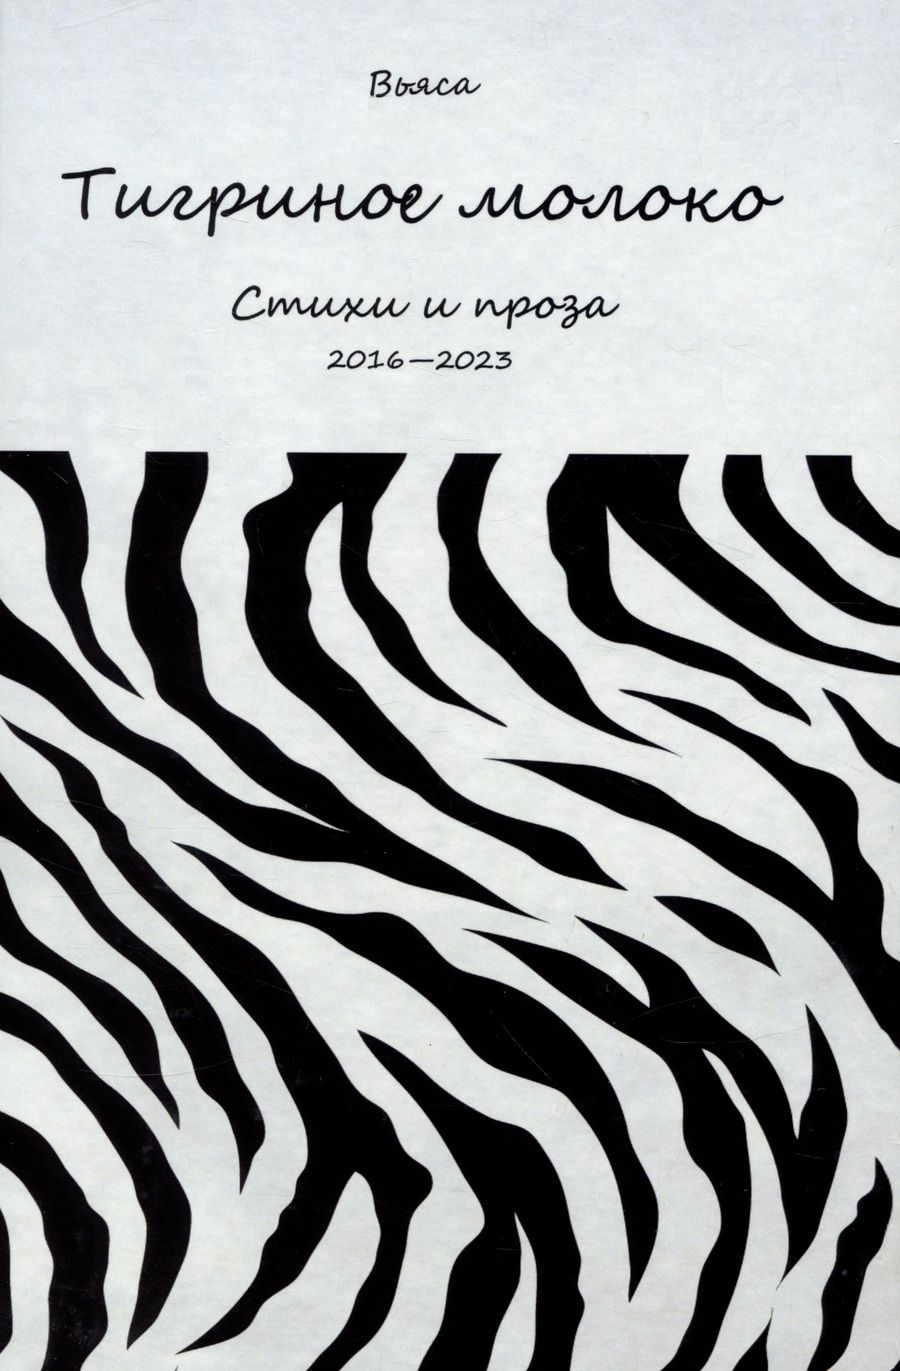 Обложка книги "Киреев: Тигриное молоко"